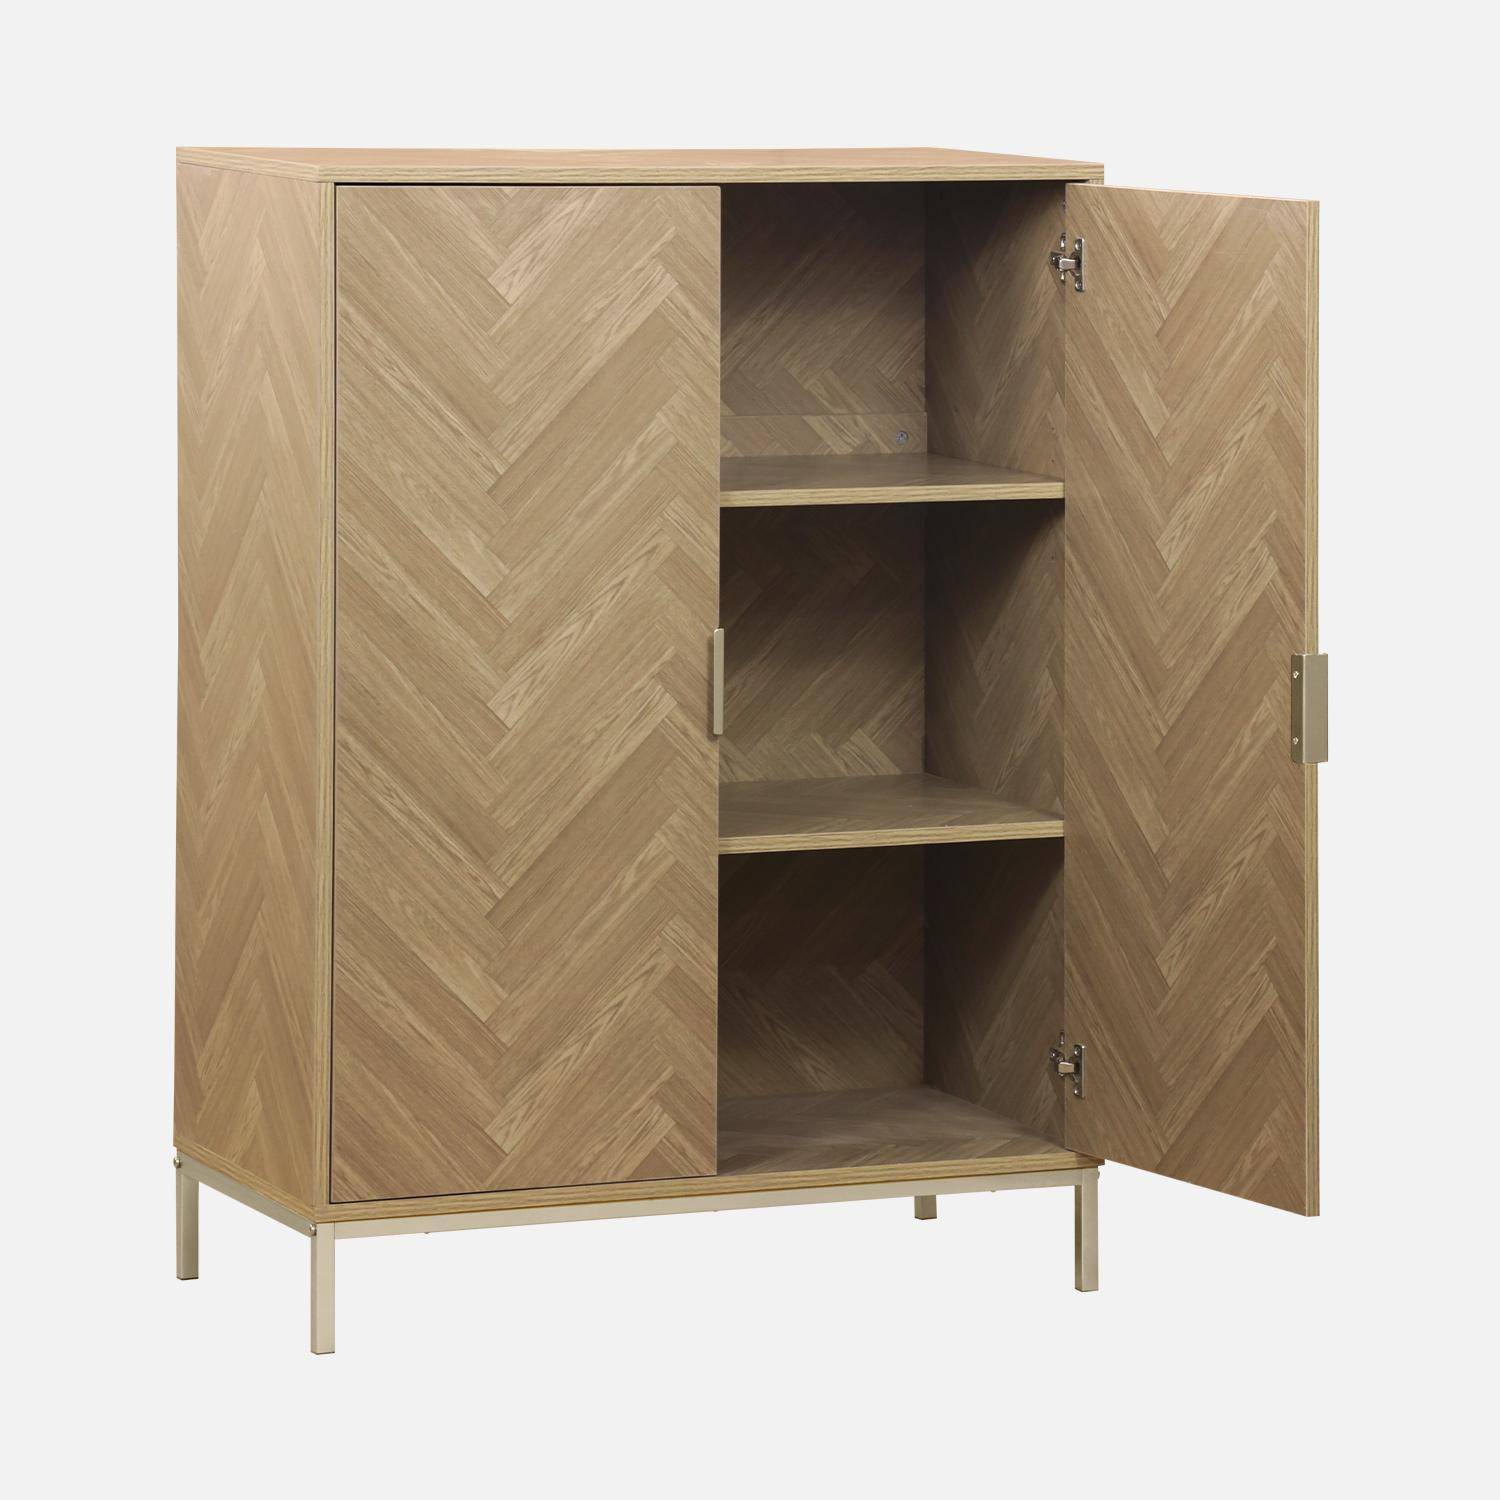 Herringbone, parquet wood-style 2-door storage cabinet, 80x40x110cm, Budapest, 2 doors, 3 shelves Photo7